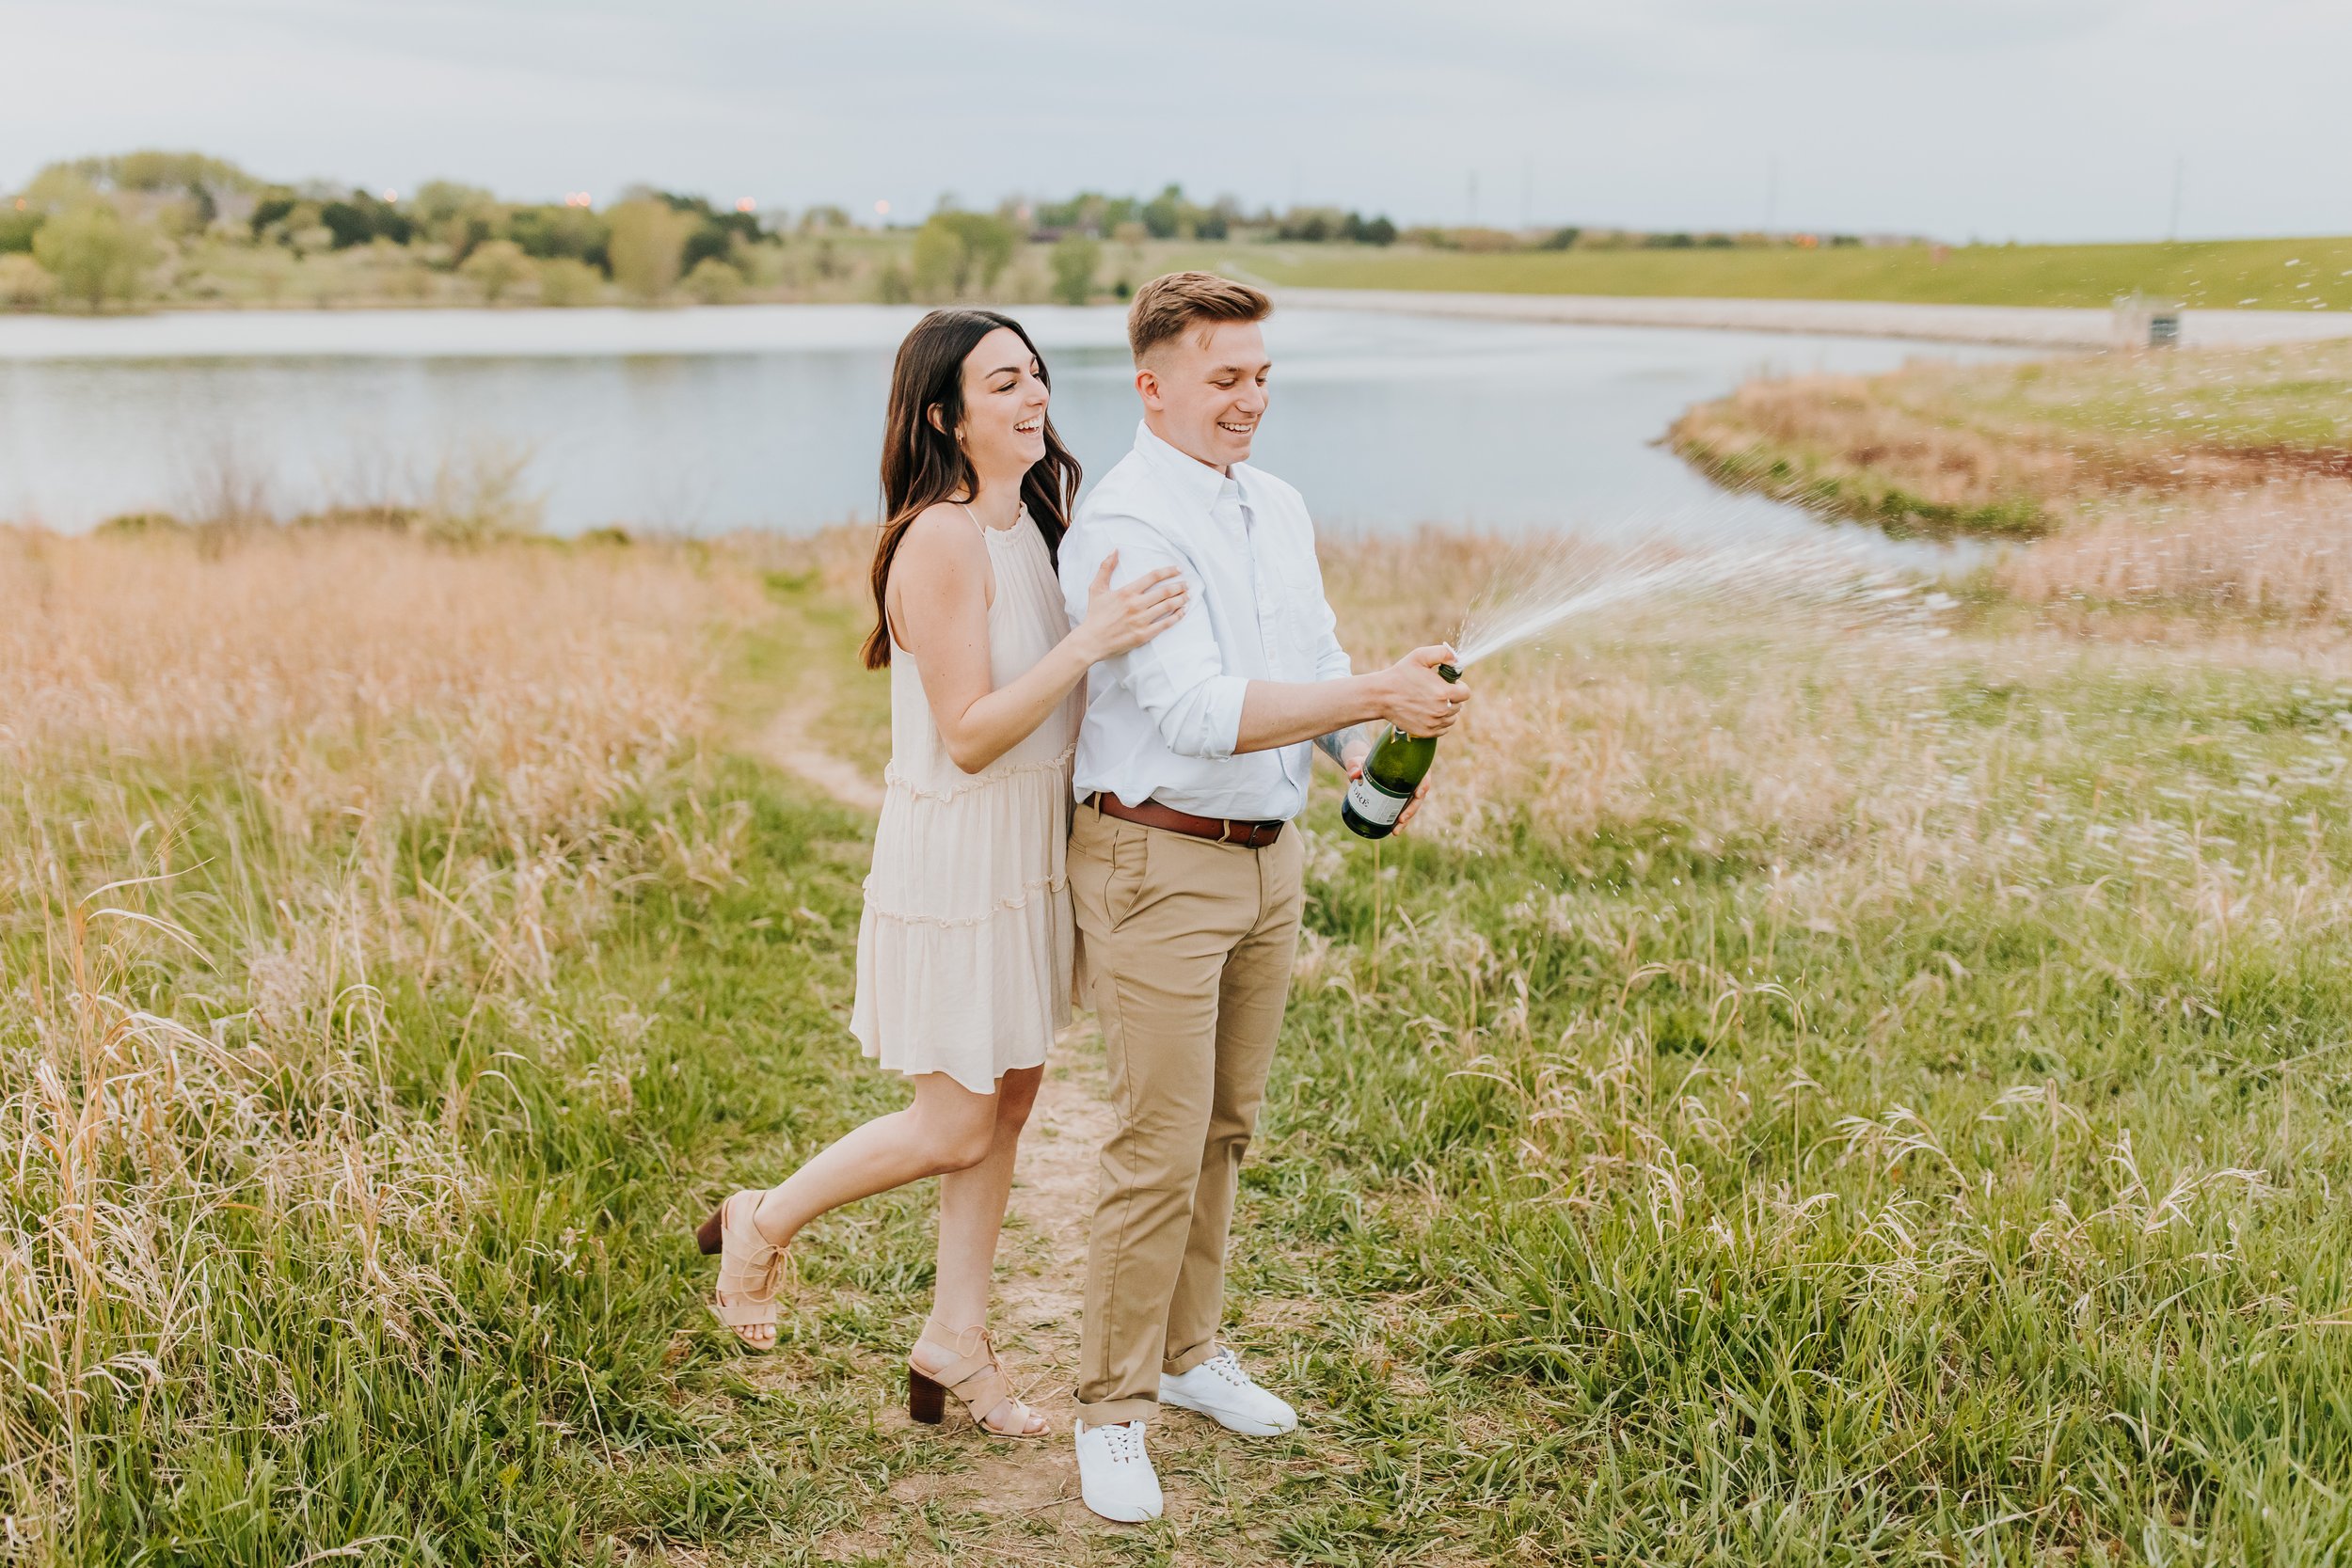 Allison & Liam - Engaged - Nathaniel Jensen Photography - Omaha Nebraska Wedding Photographer-137.jpg